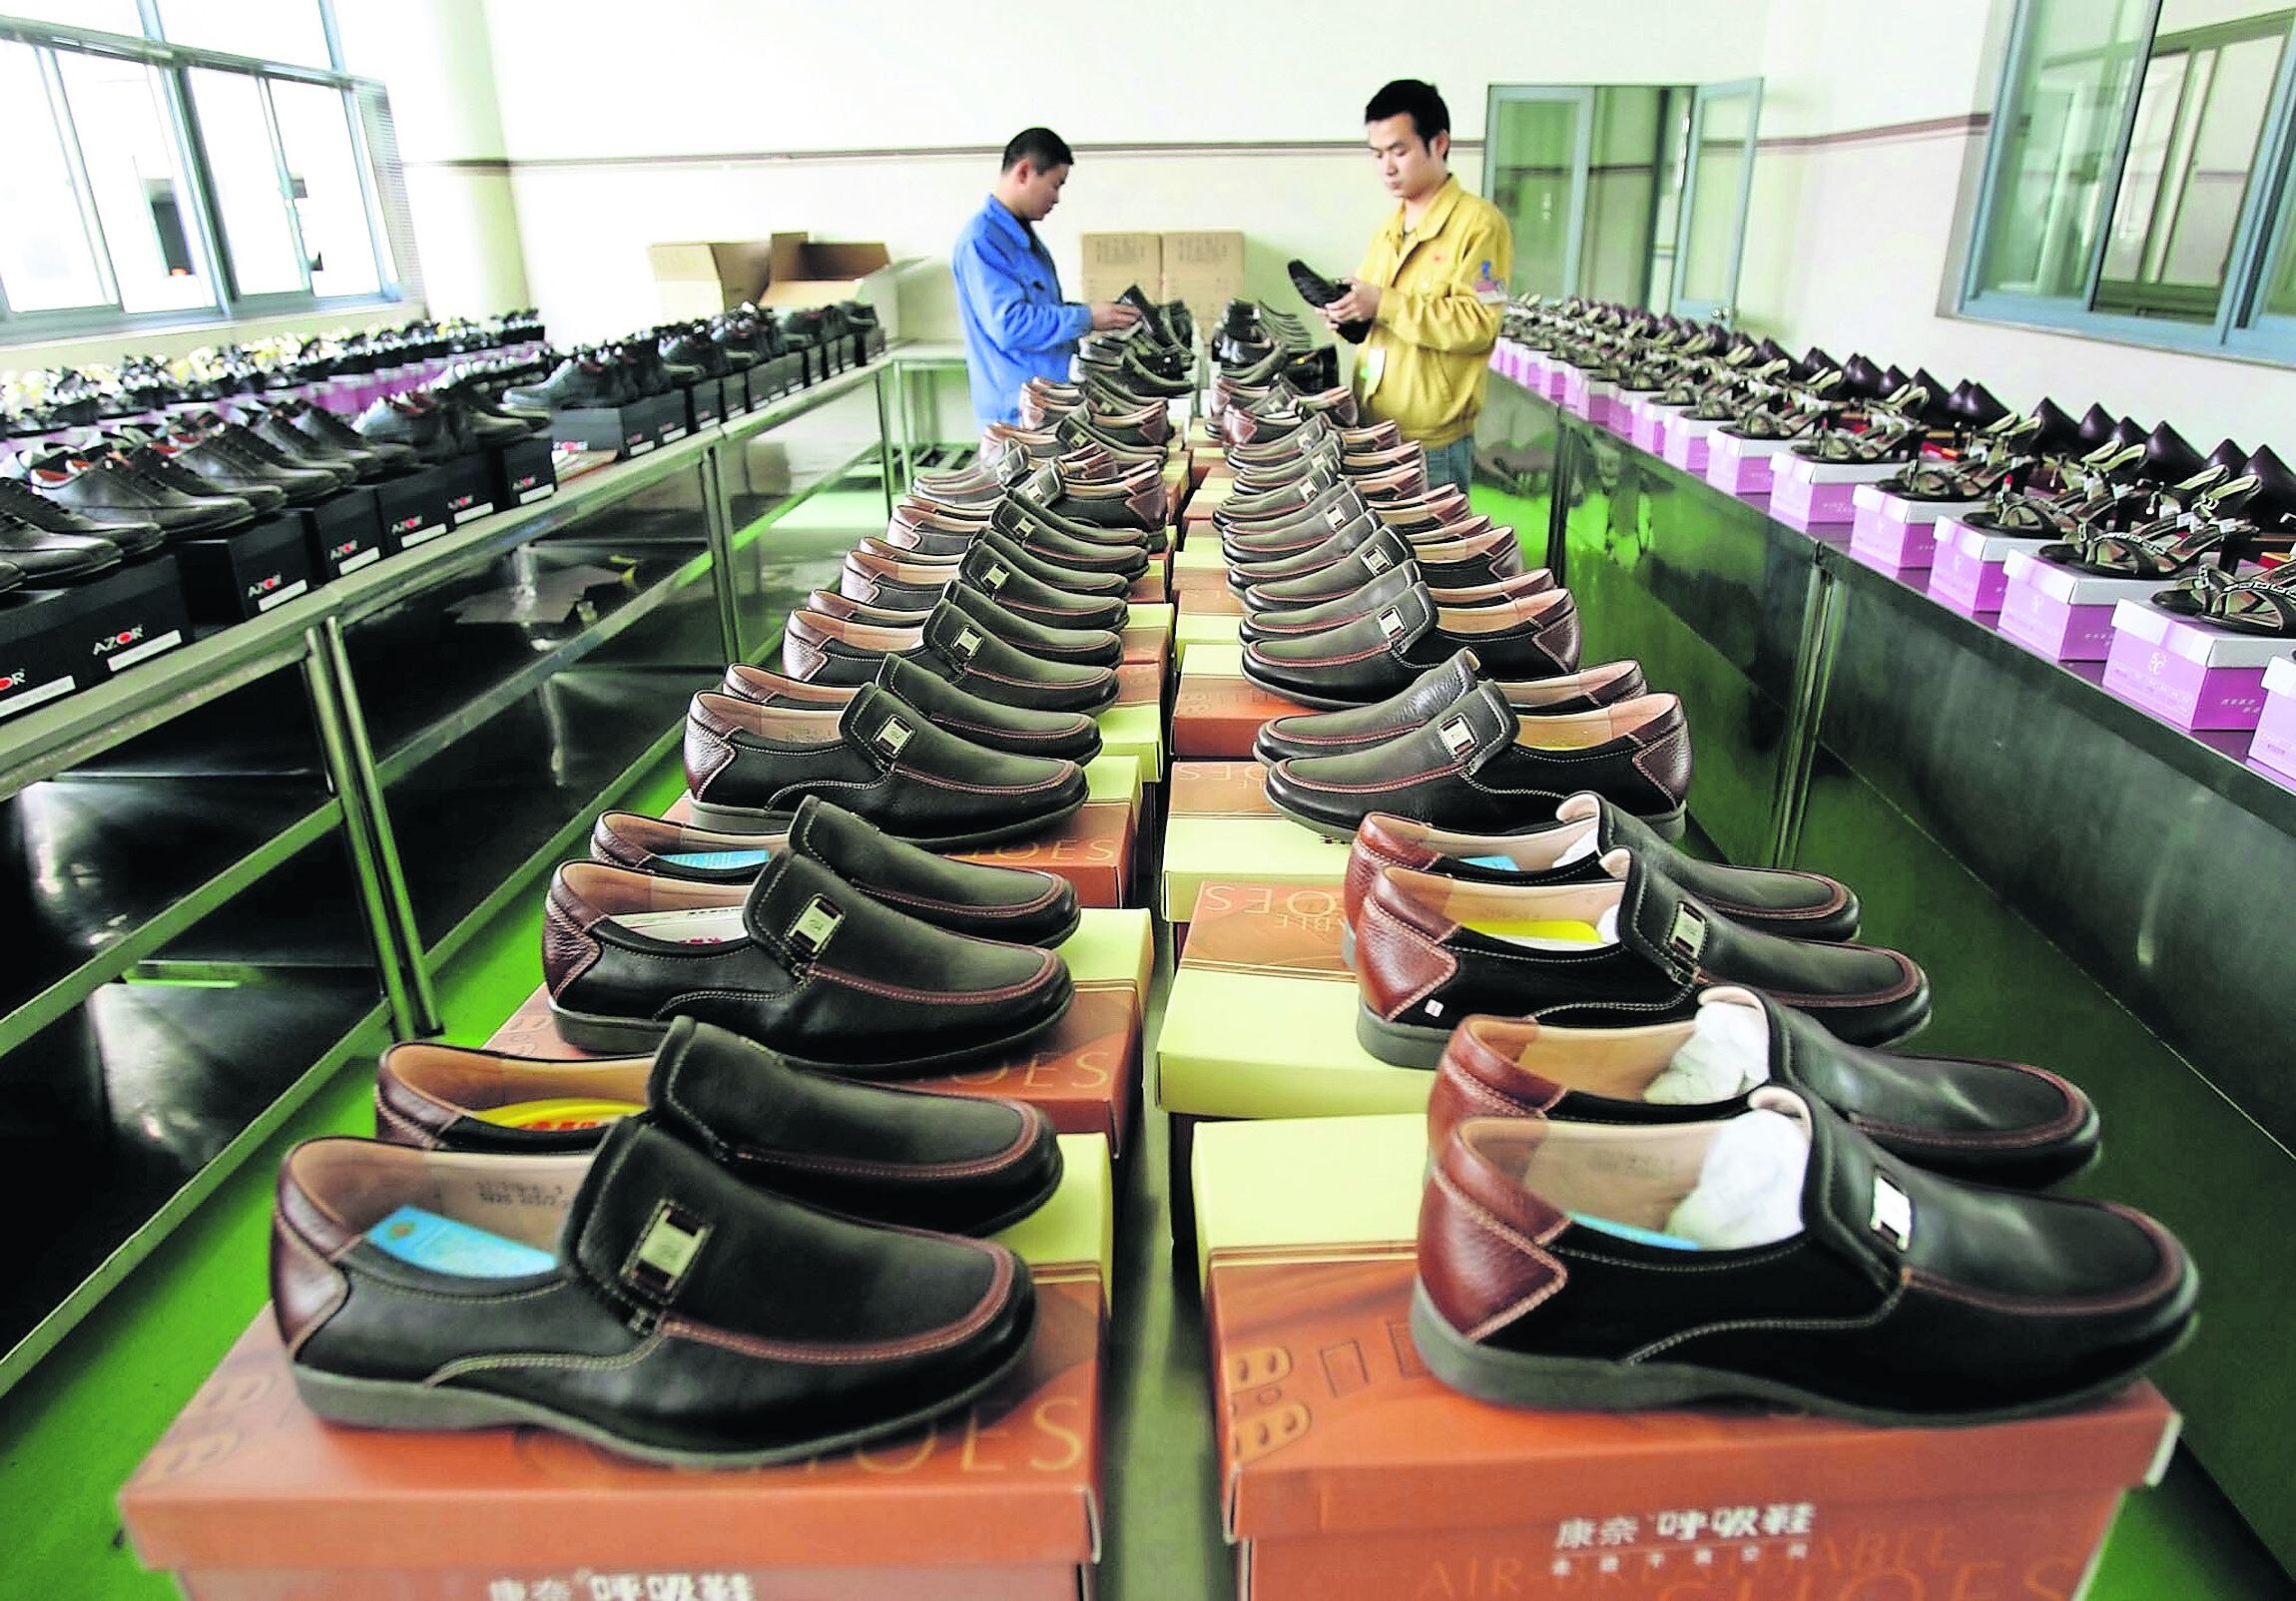 méxico inicia investigación contra importación de calzado chino por prácticas desleales